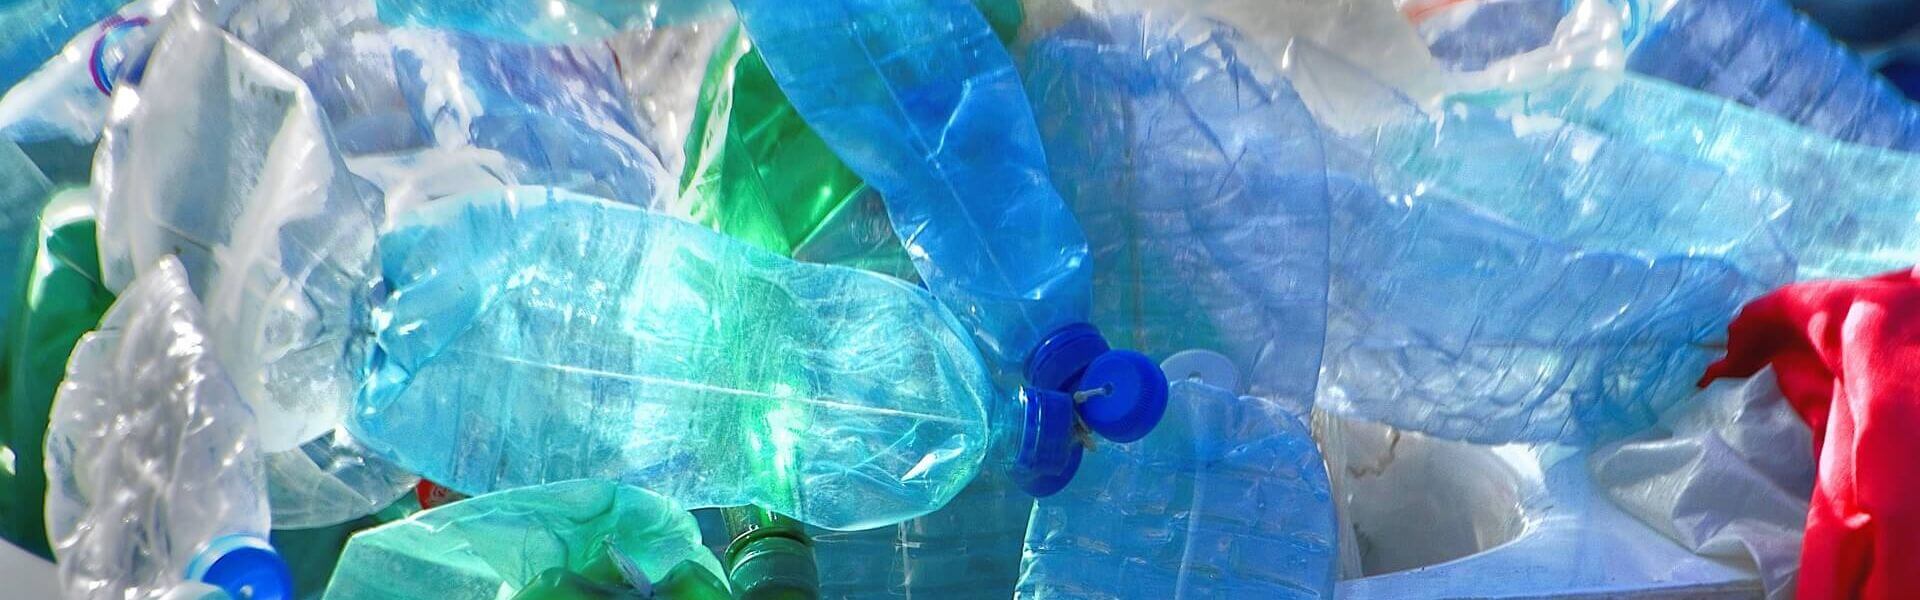 Slajd - 5 - butelki plastikowe